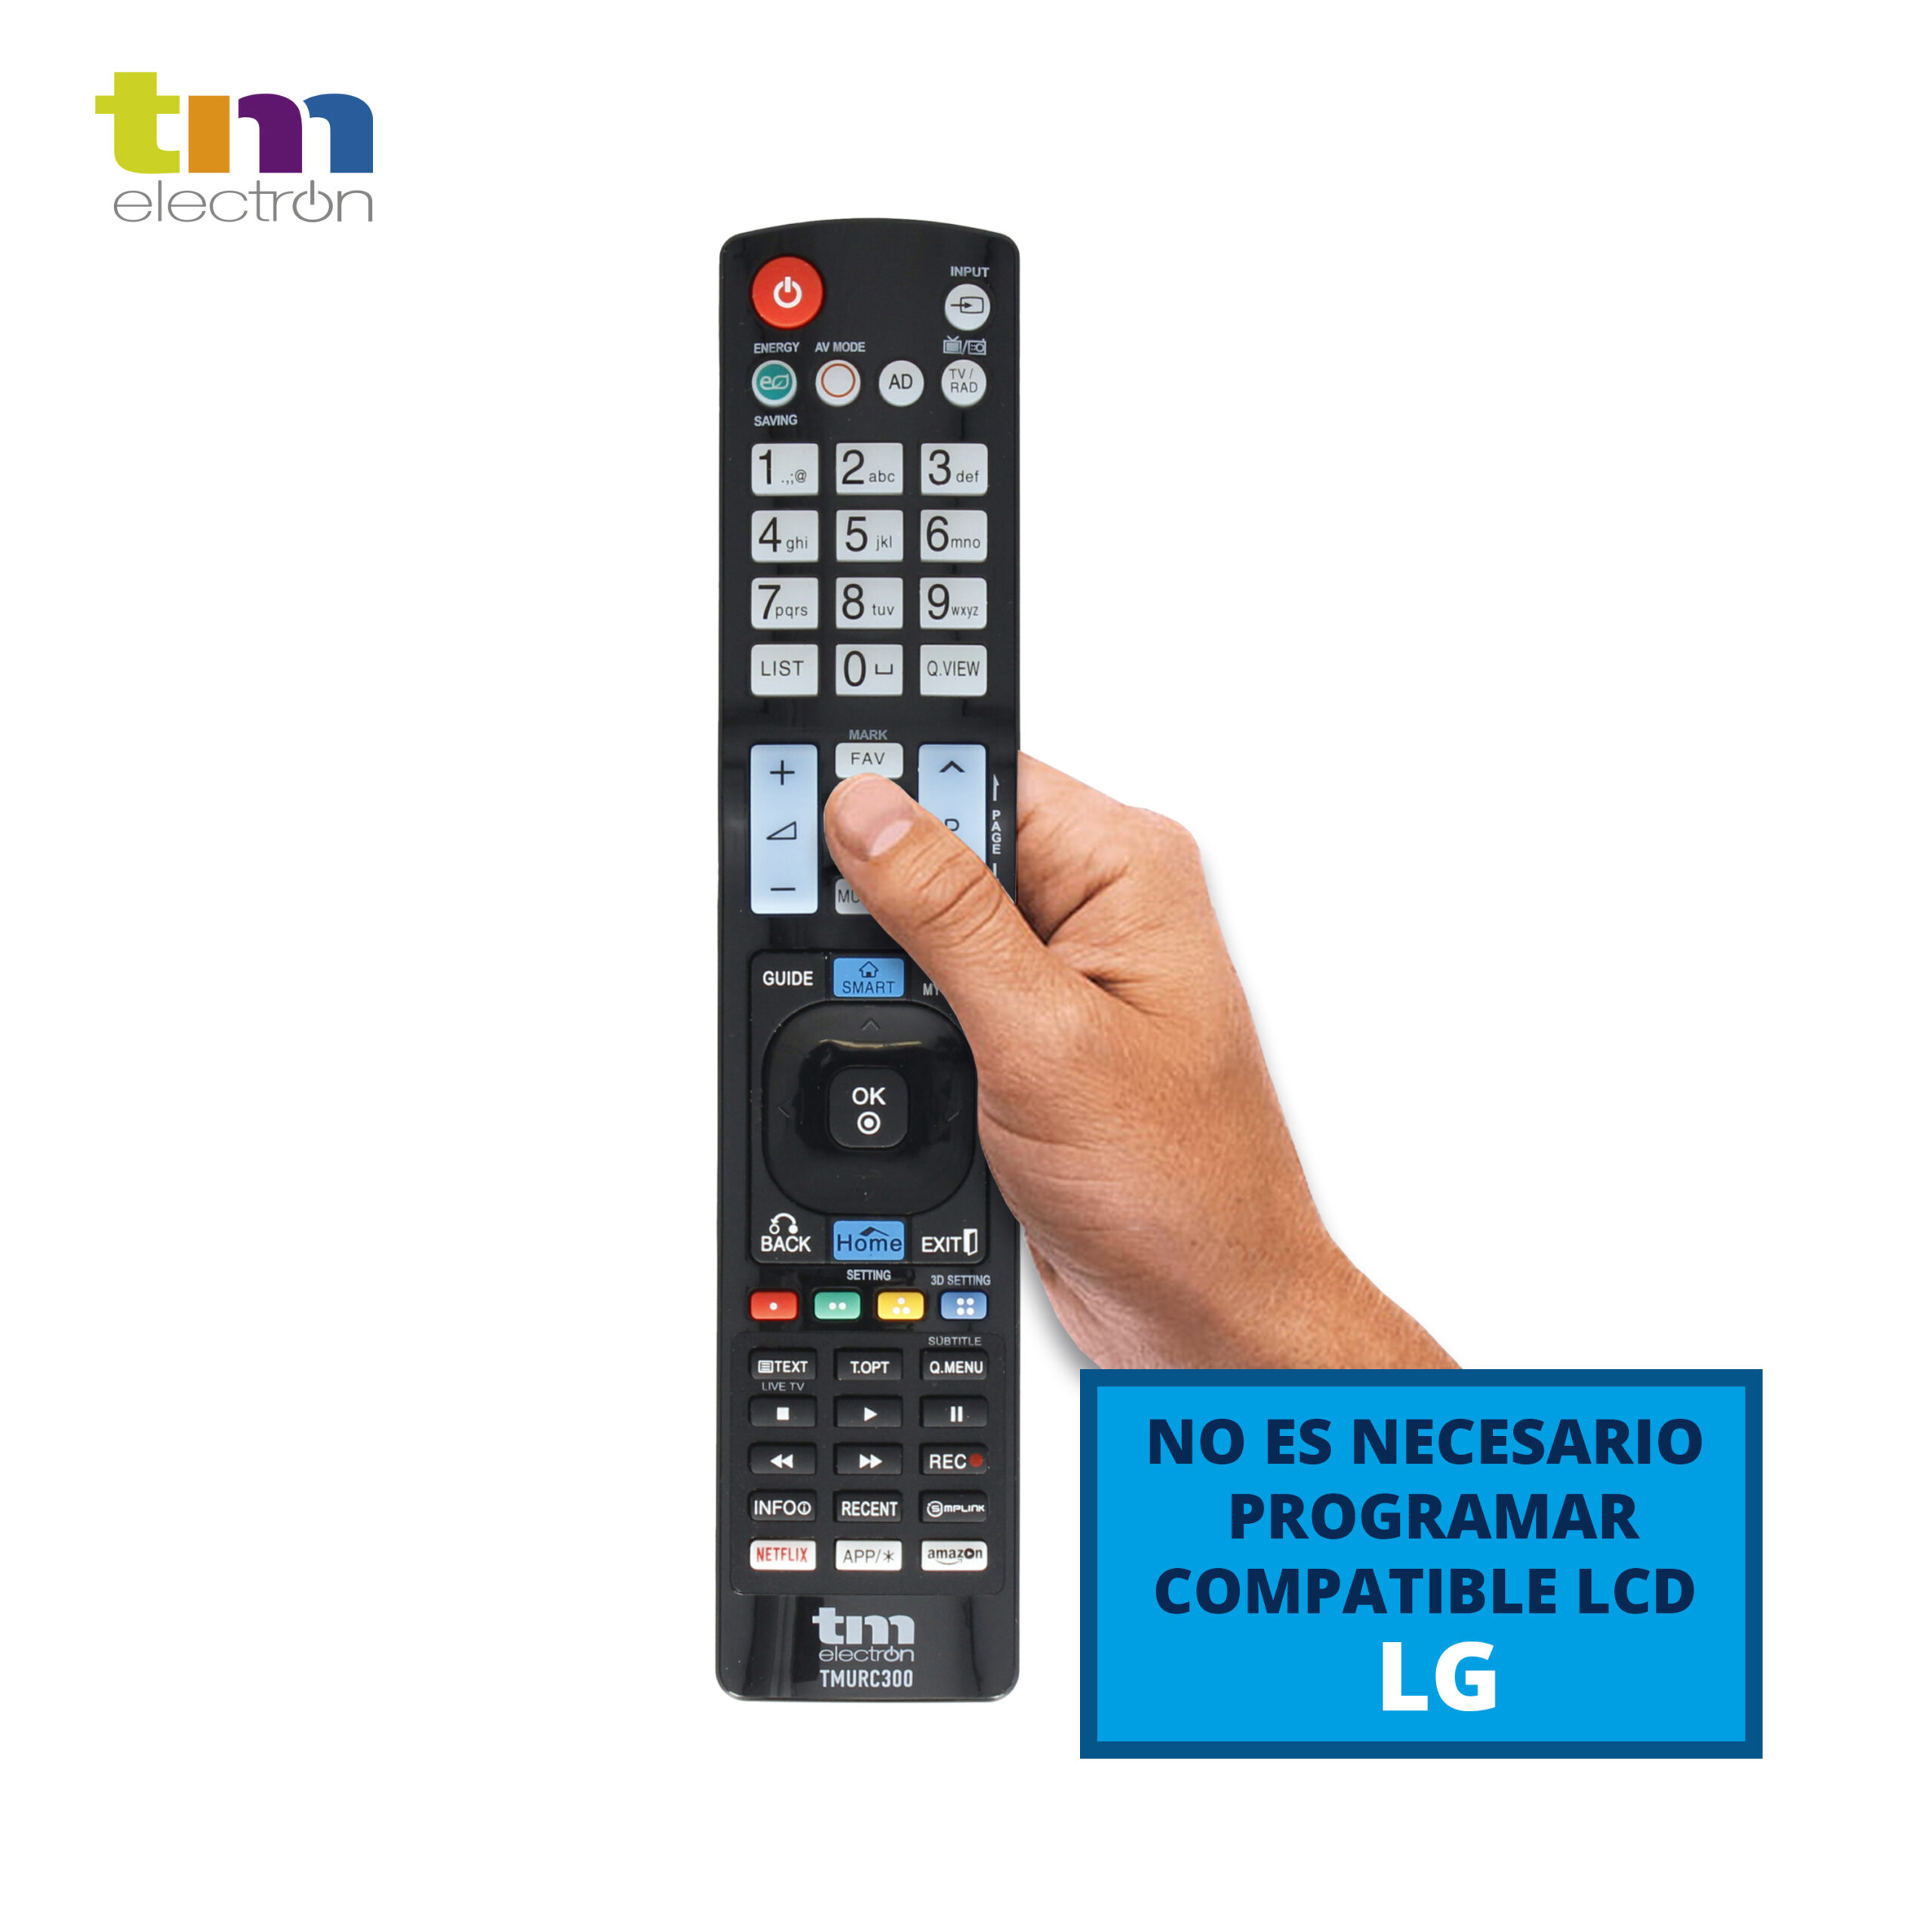 Spark Mando TV a Distancia Gramde Compatible con LG S-9RC/3